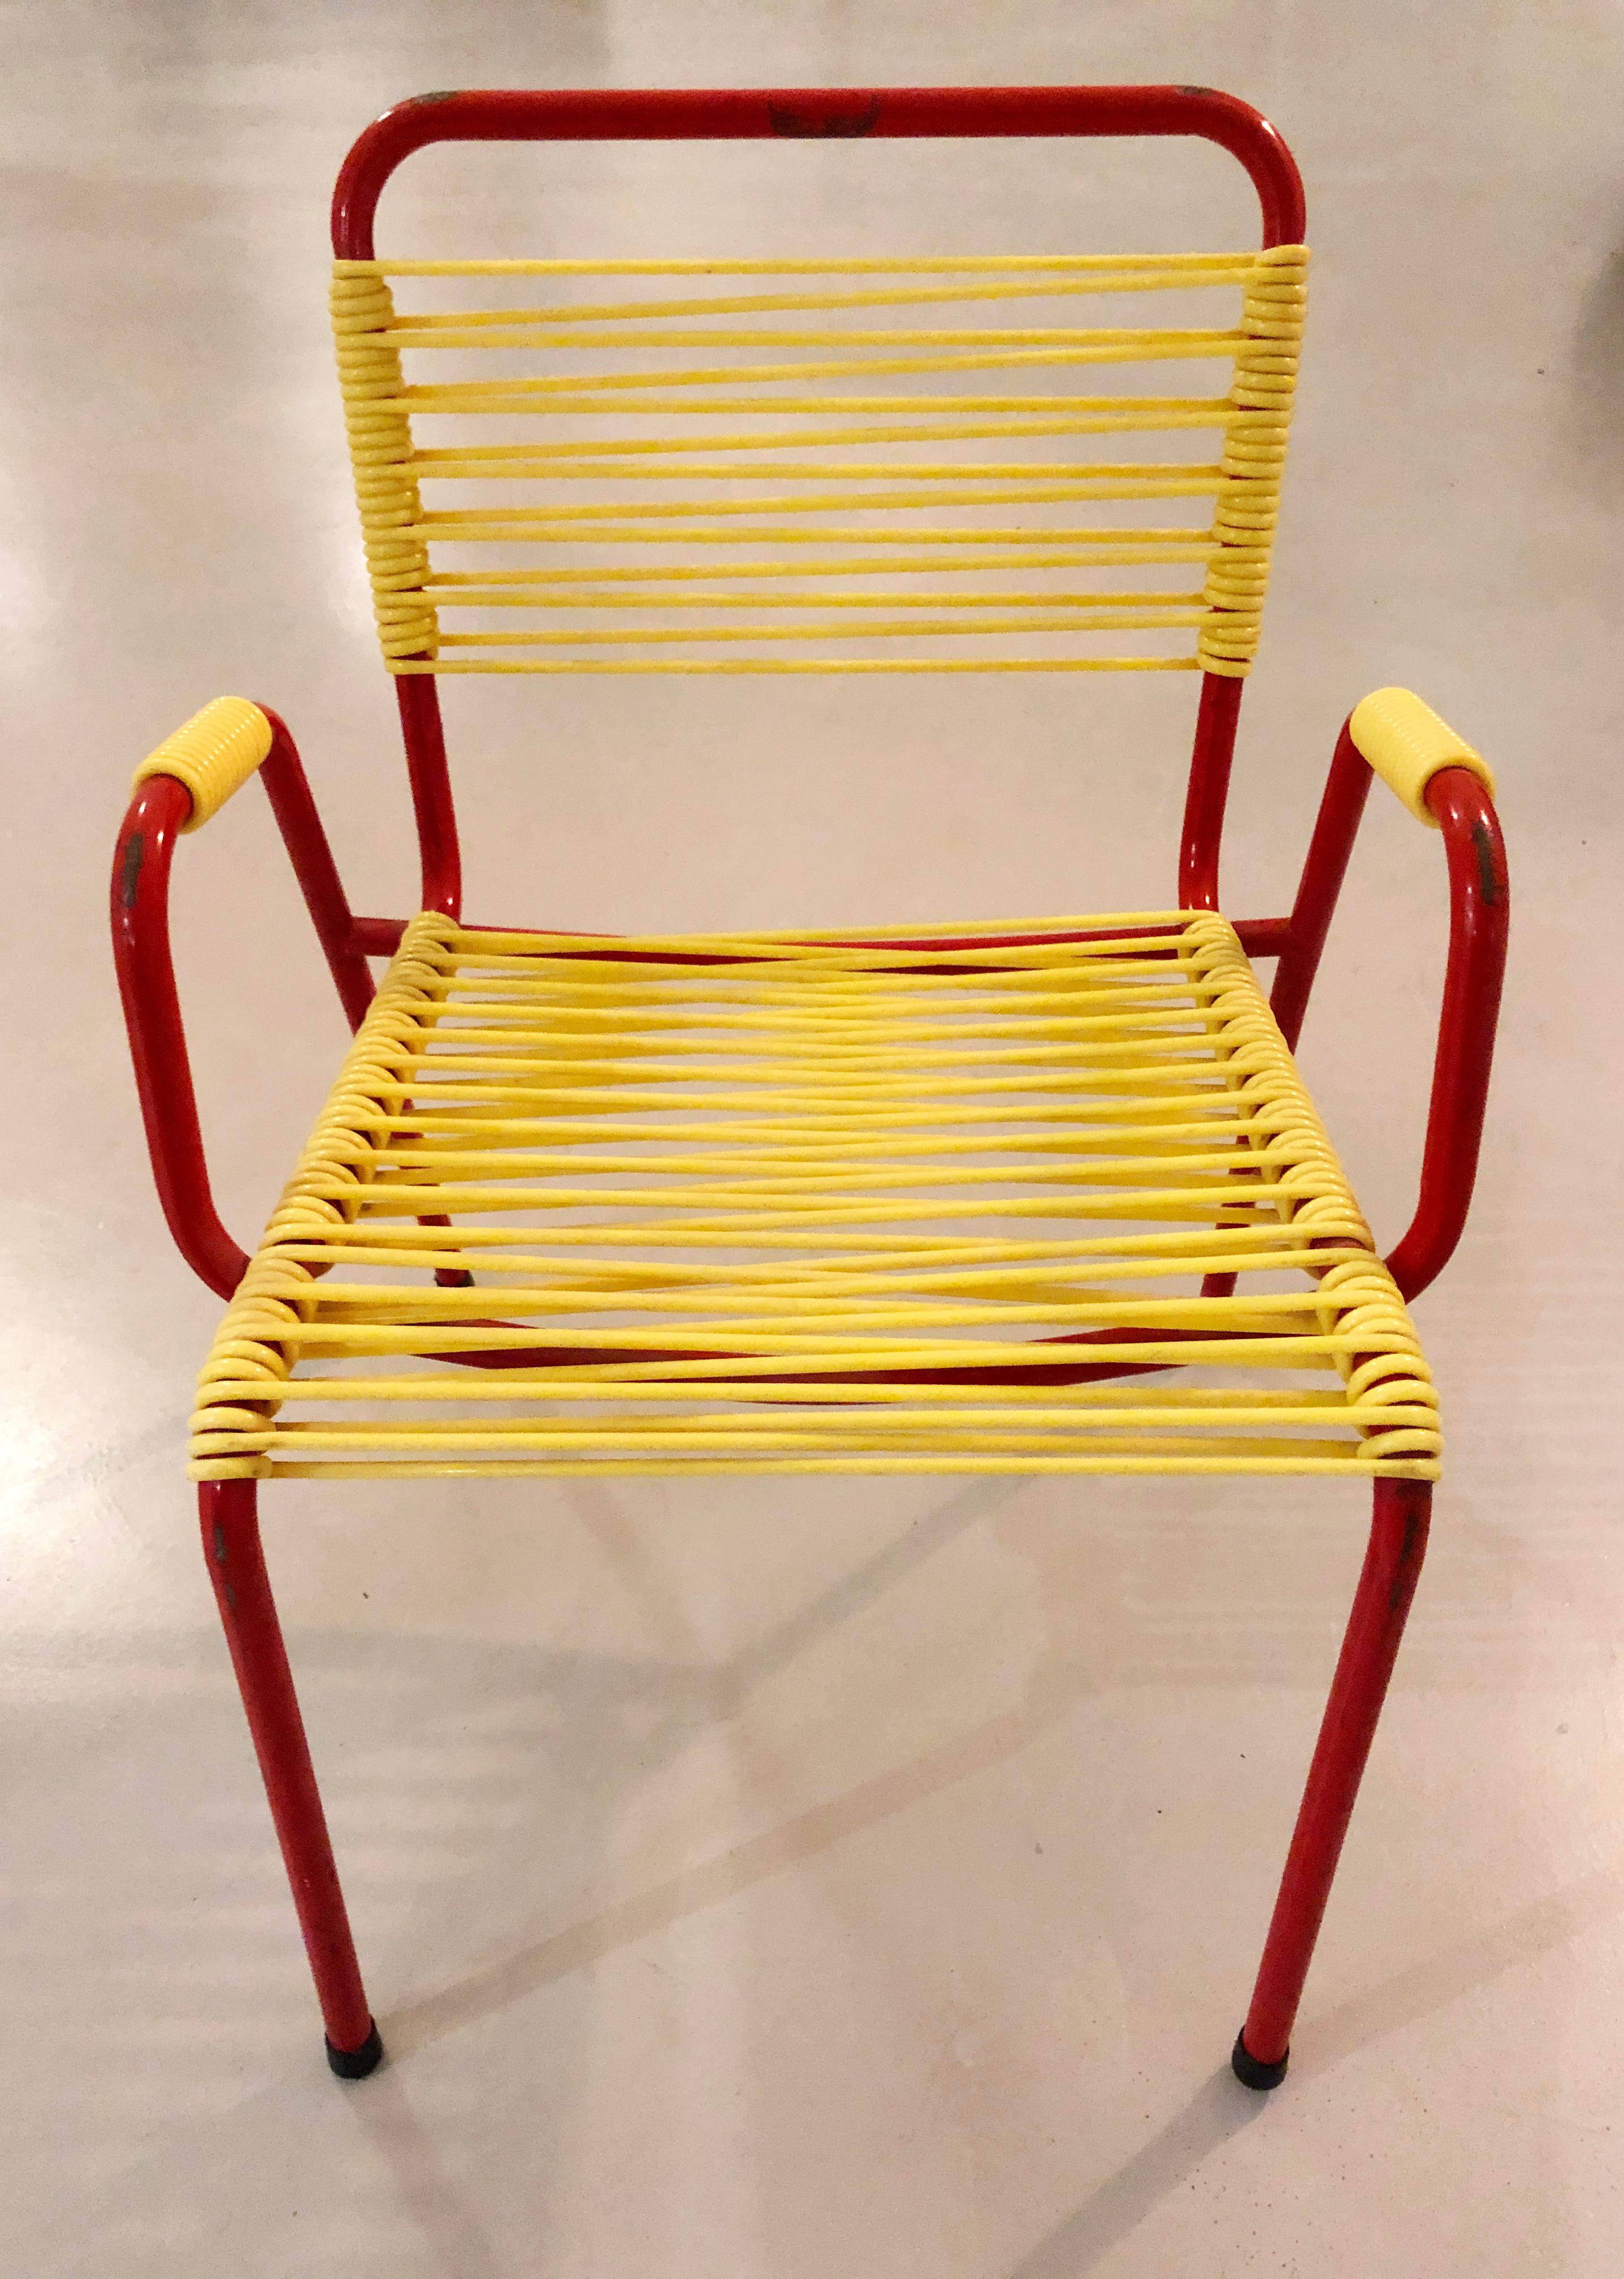 Children's chair scoubidou Torck - 1950's For Sale 3